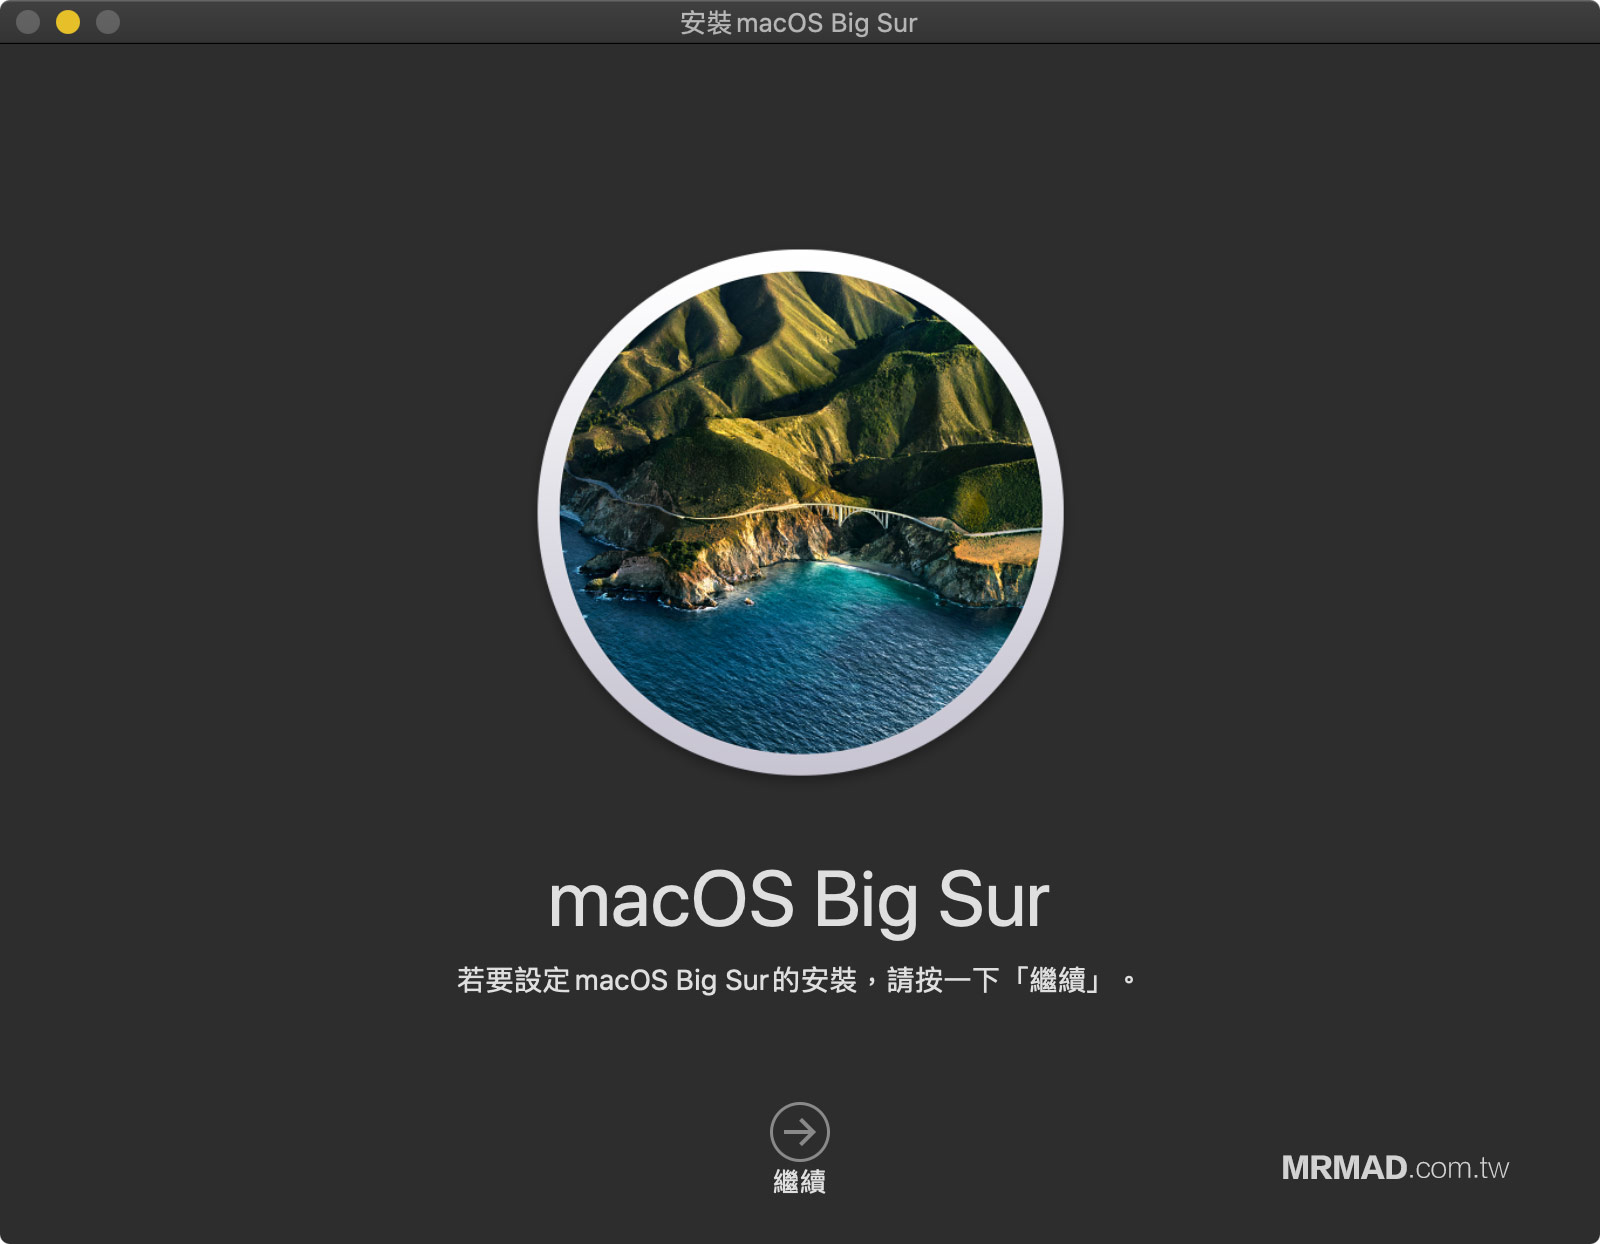 開始製作 macOS Big Sur 系統USB隨身碟